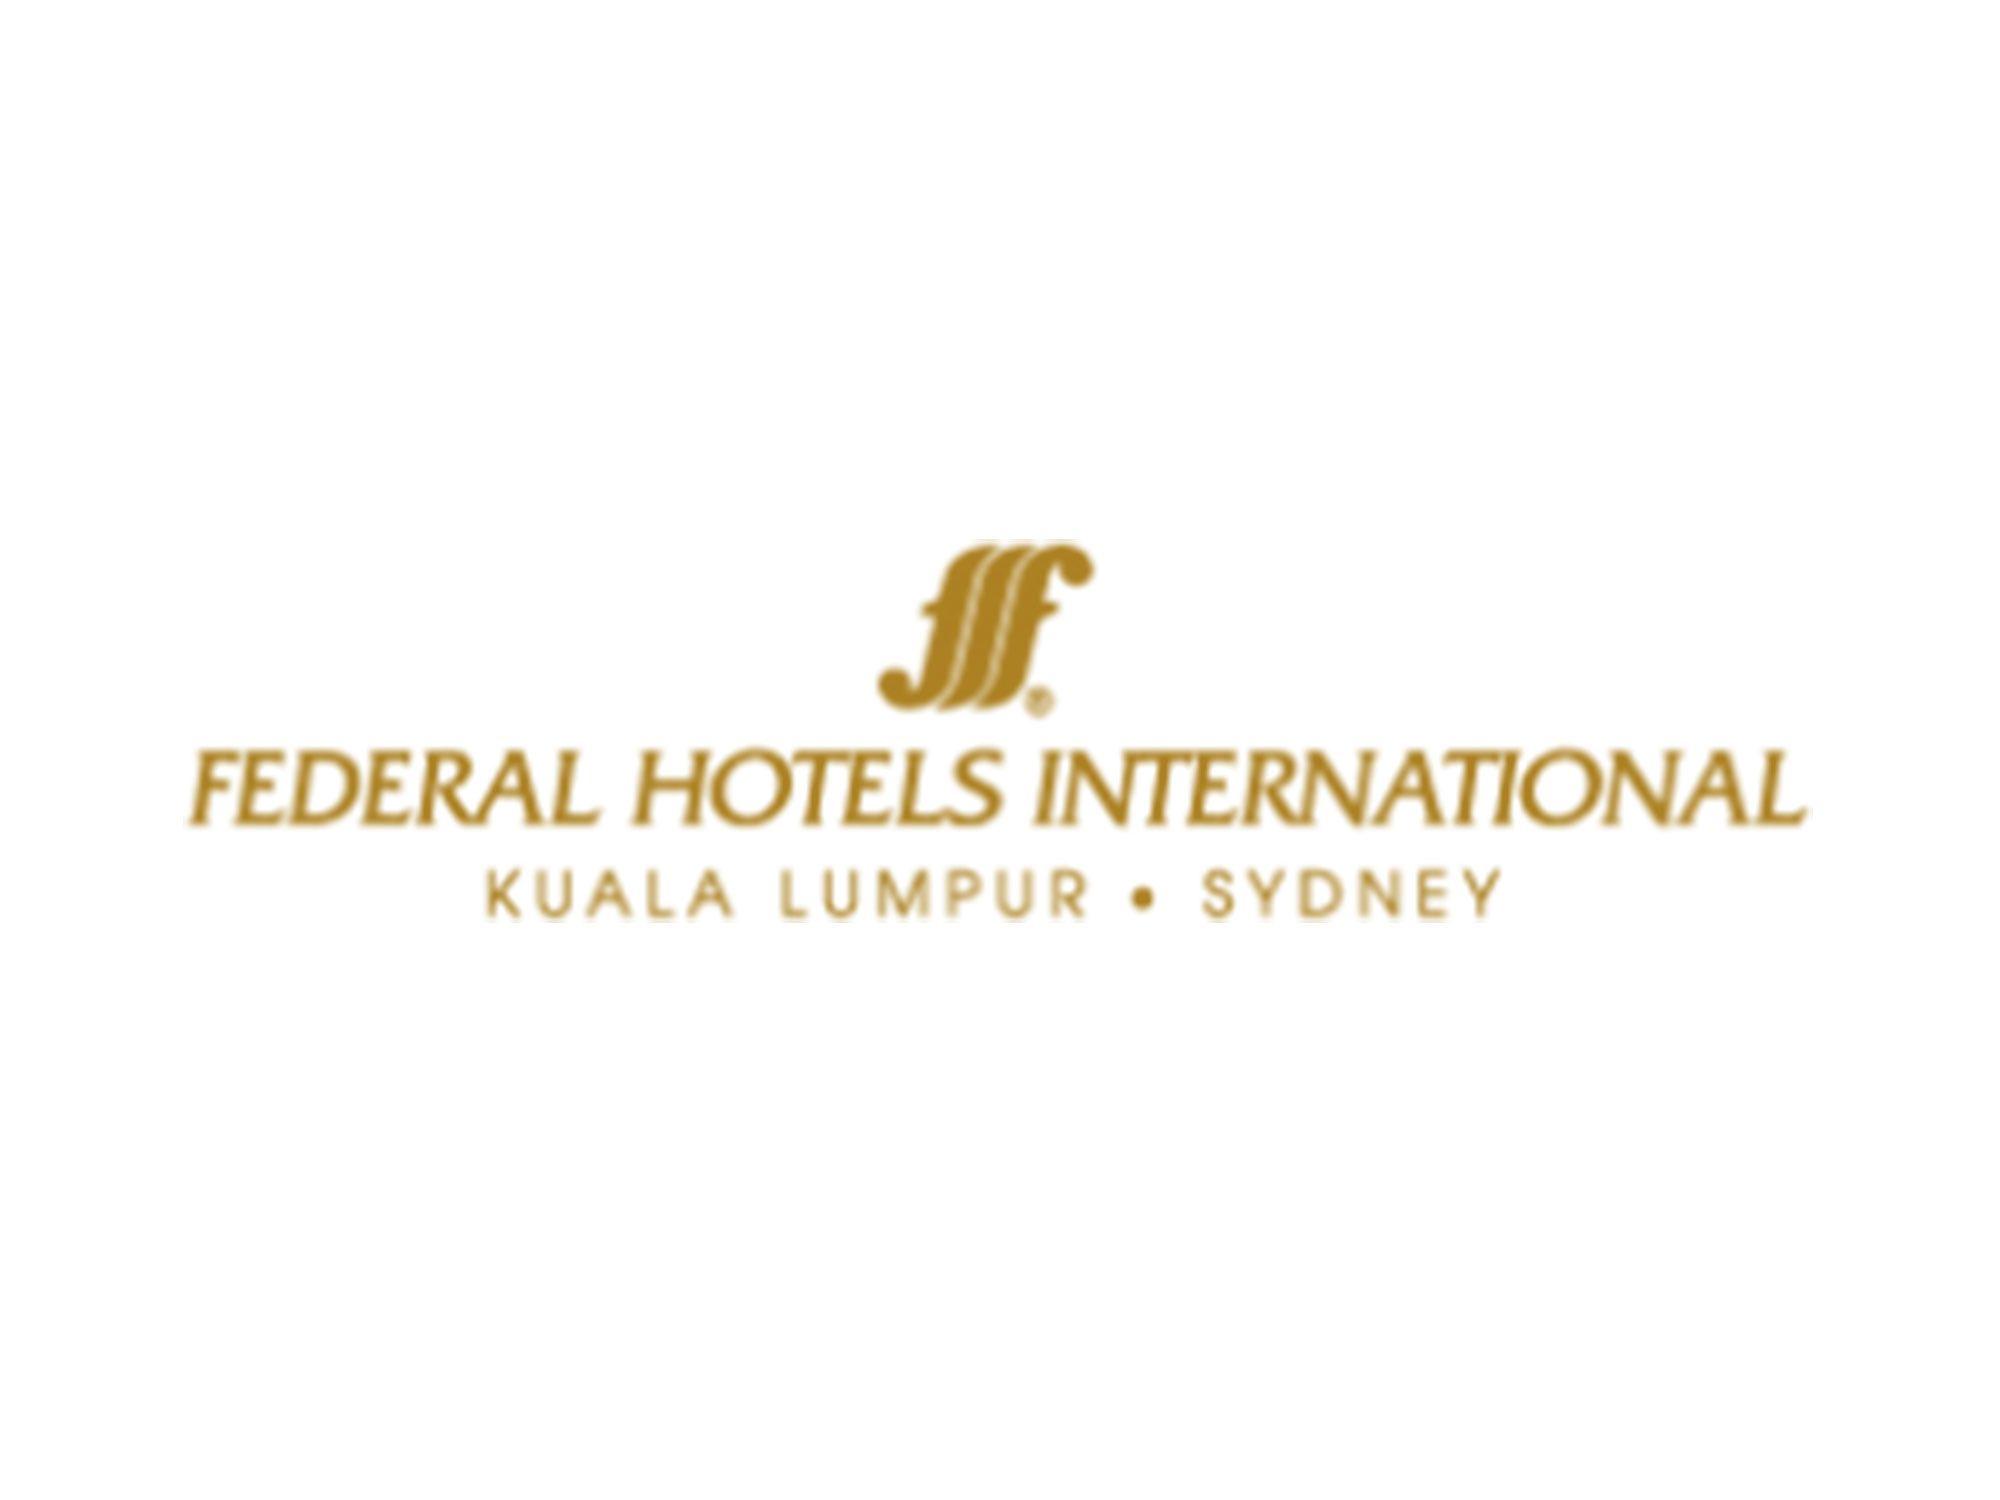 Hotels International Logo - Federal Hotels International